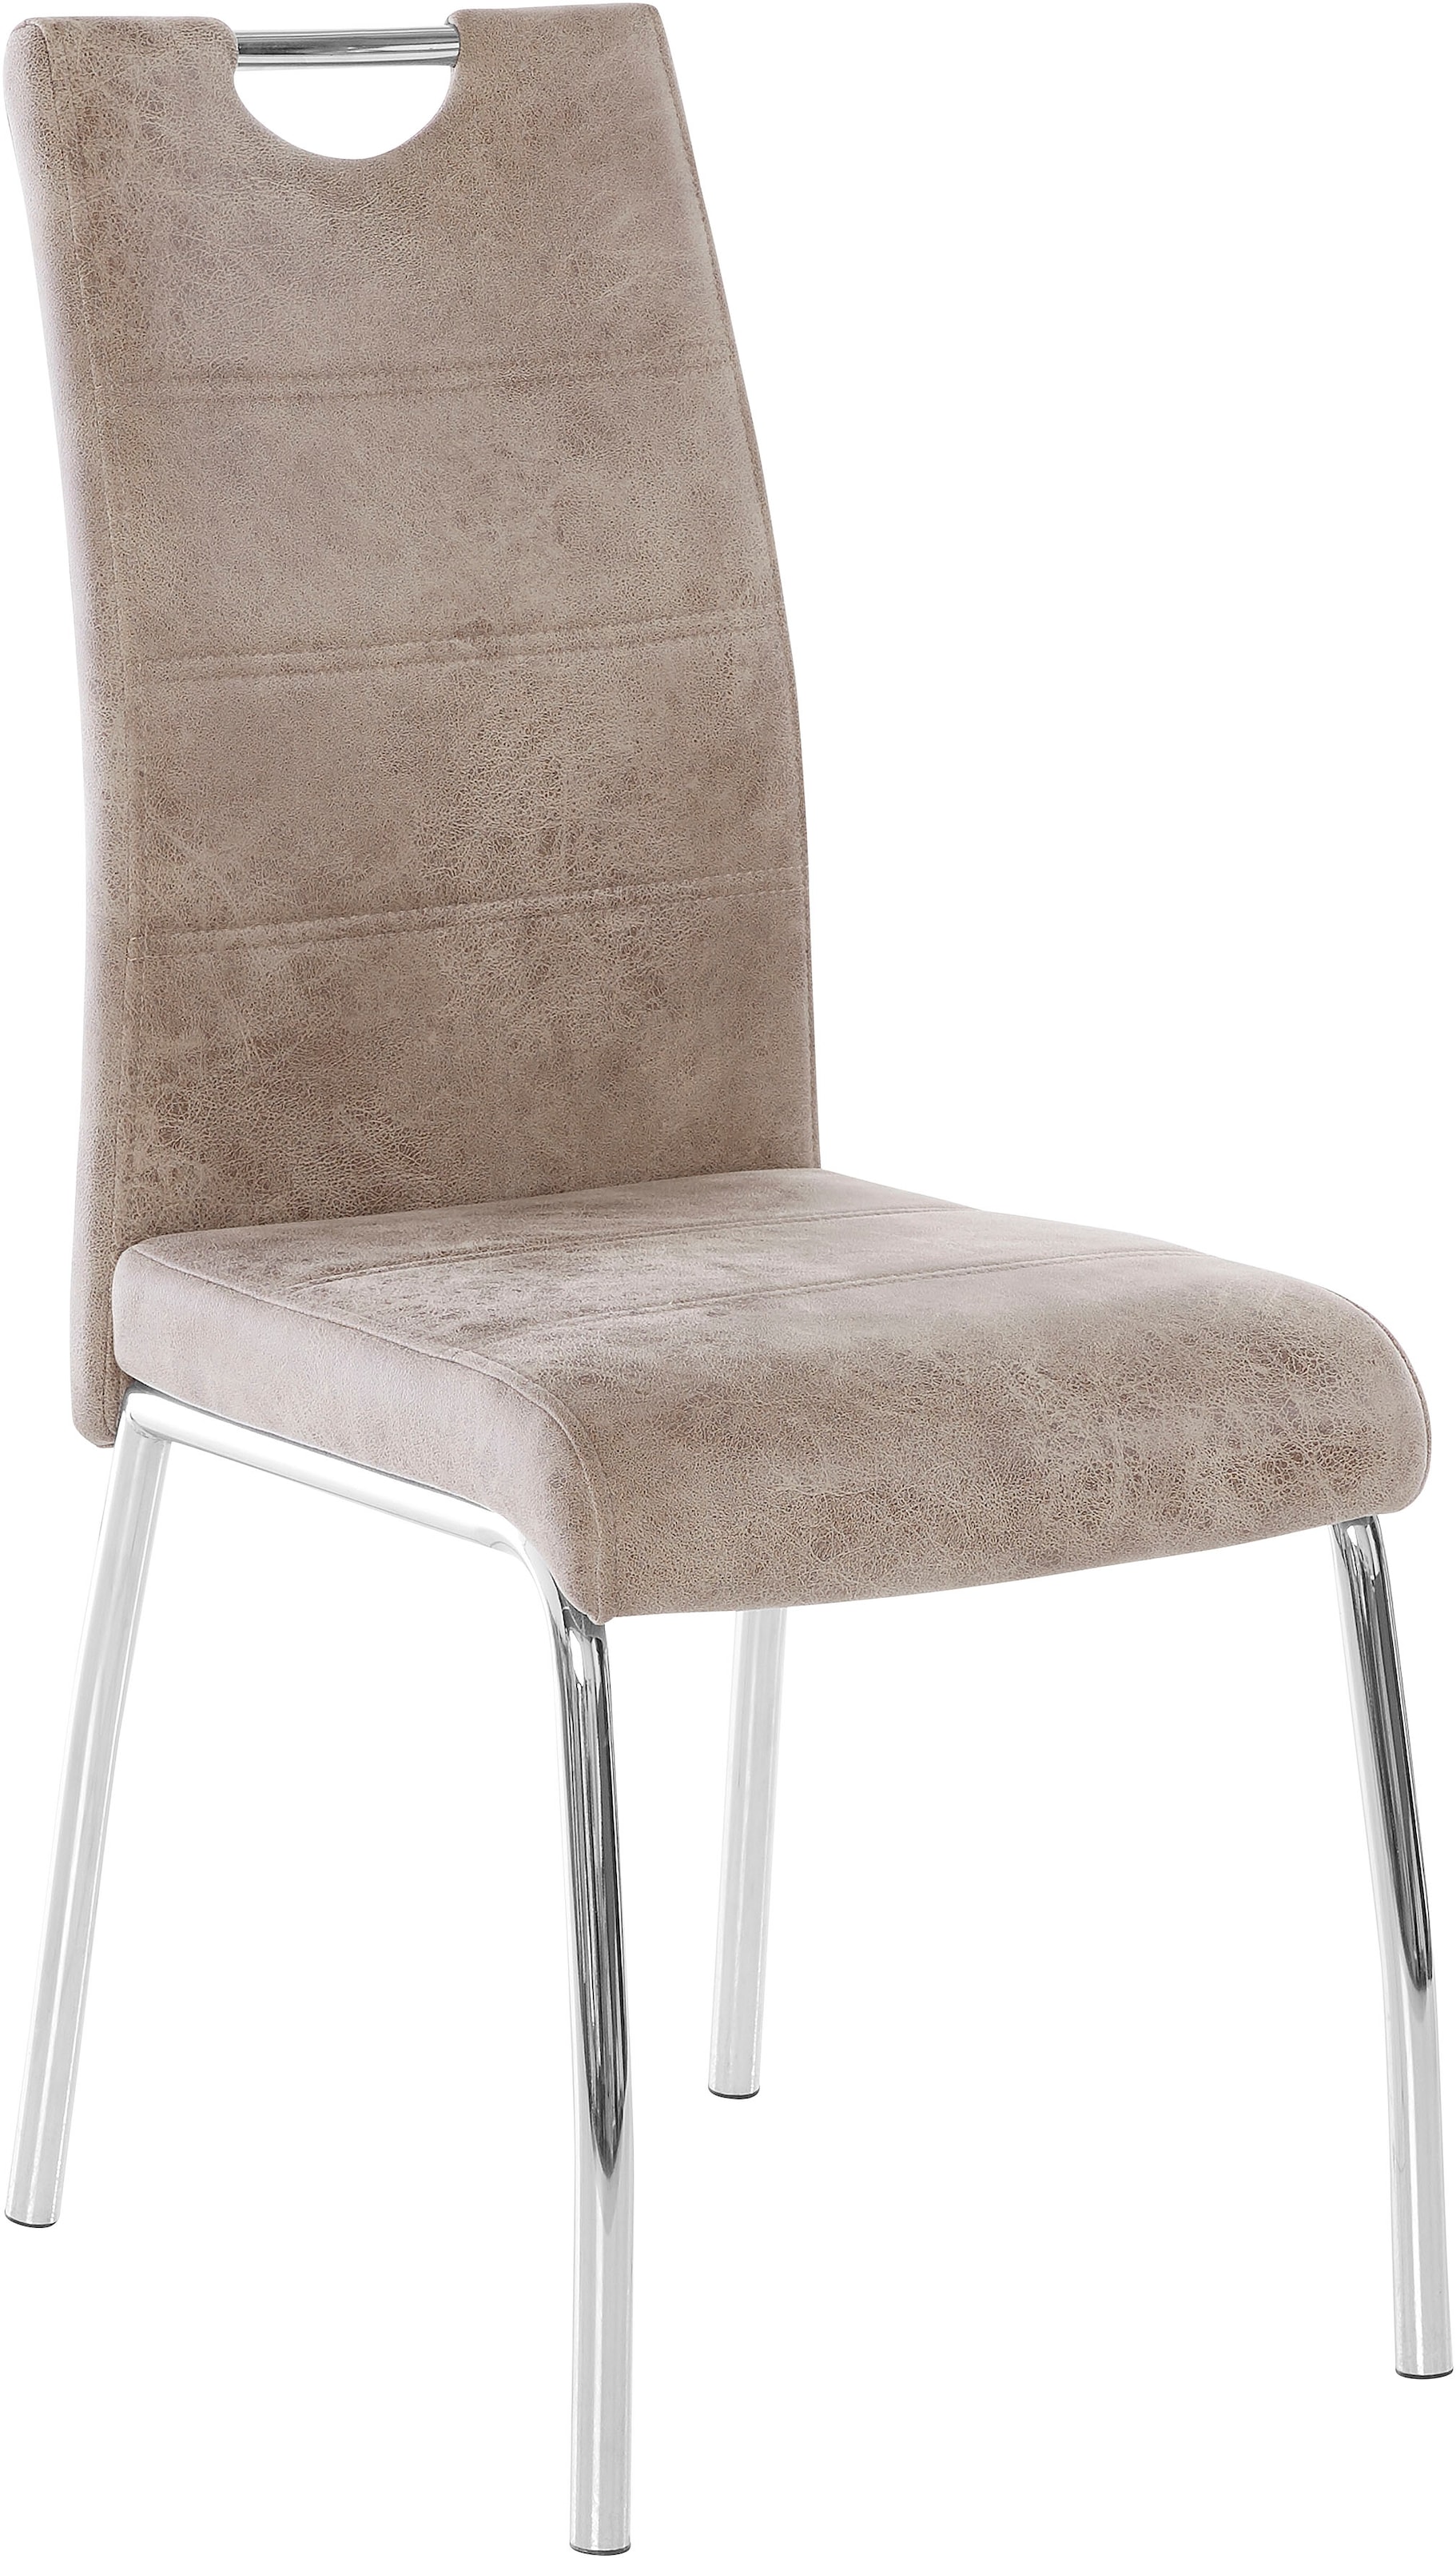 HELA Stuhl »Susi«, (Set), Stück kaufen 1, bequem oder St., 4 4 Polyester, 2